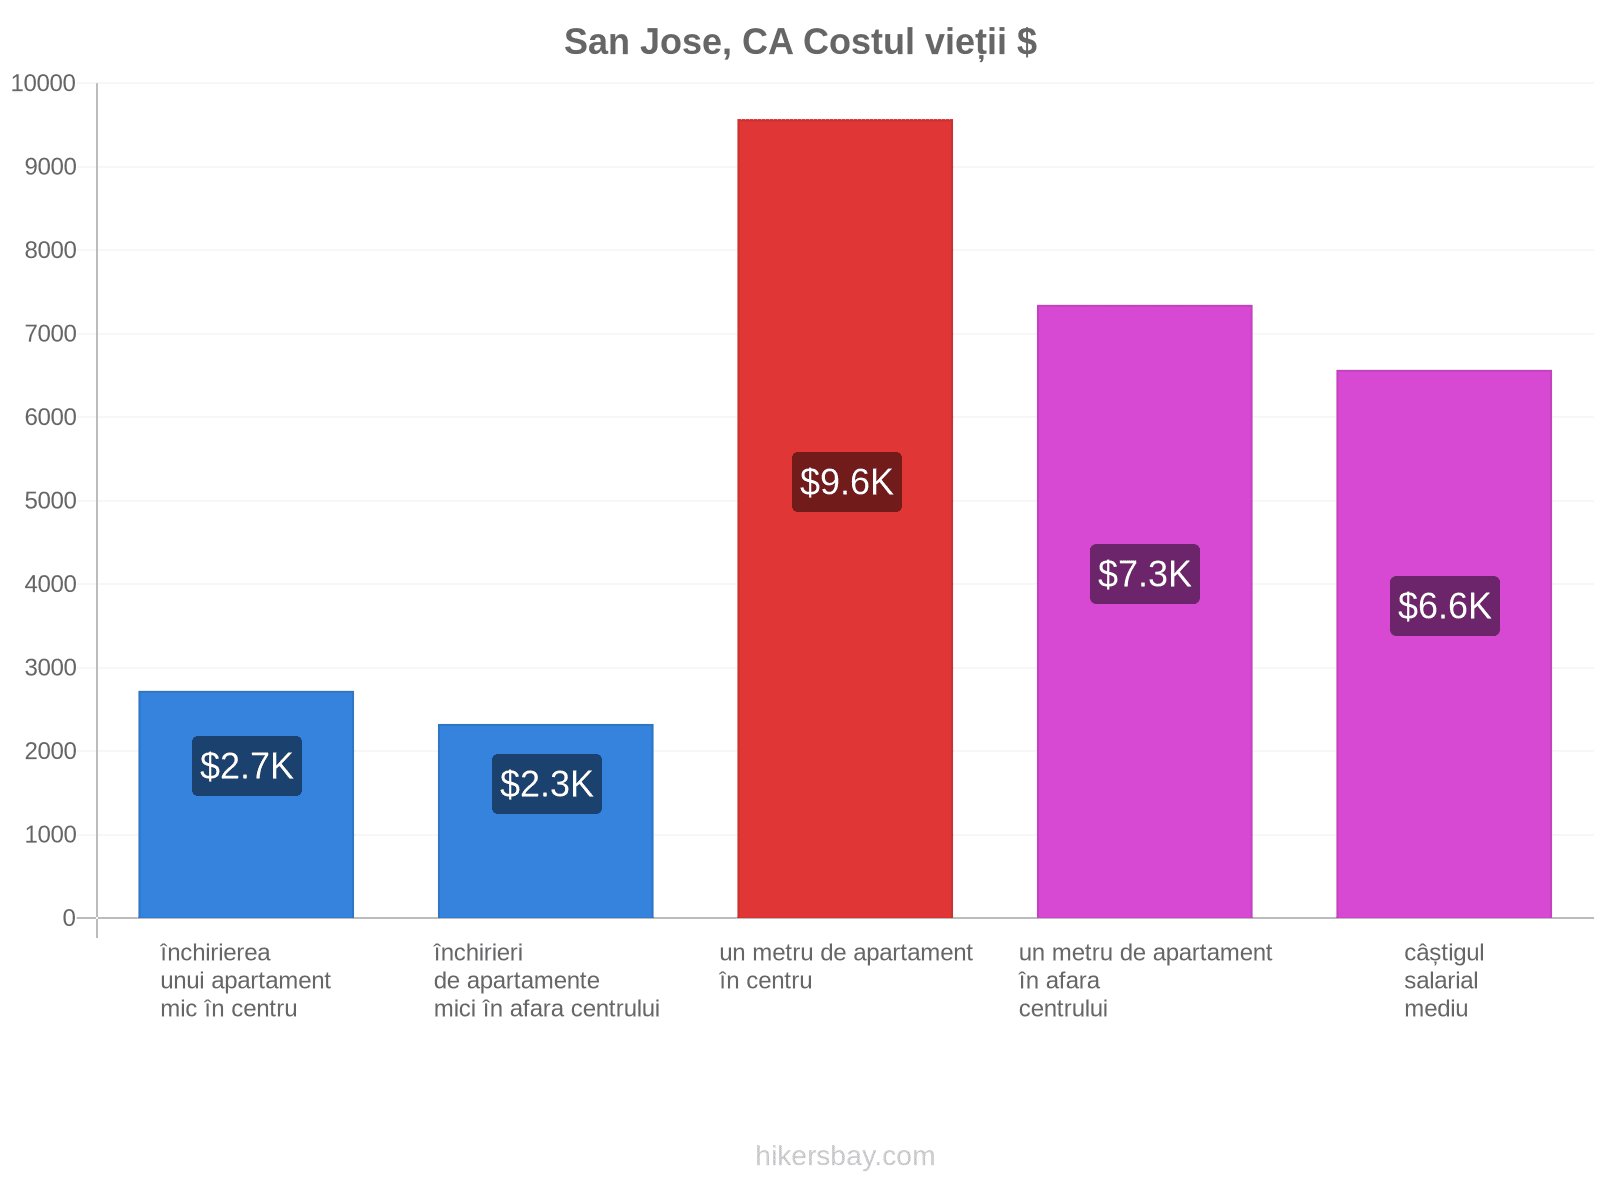 San Jose, CA costul vieții hikersbay.com